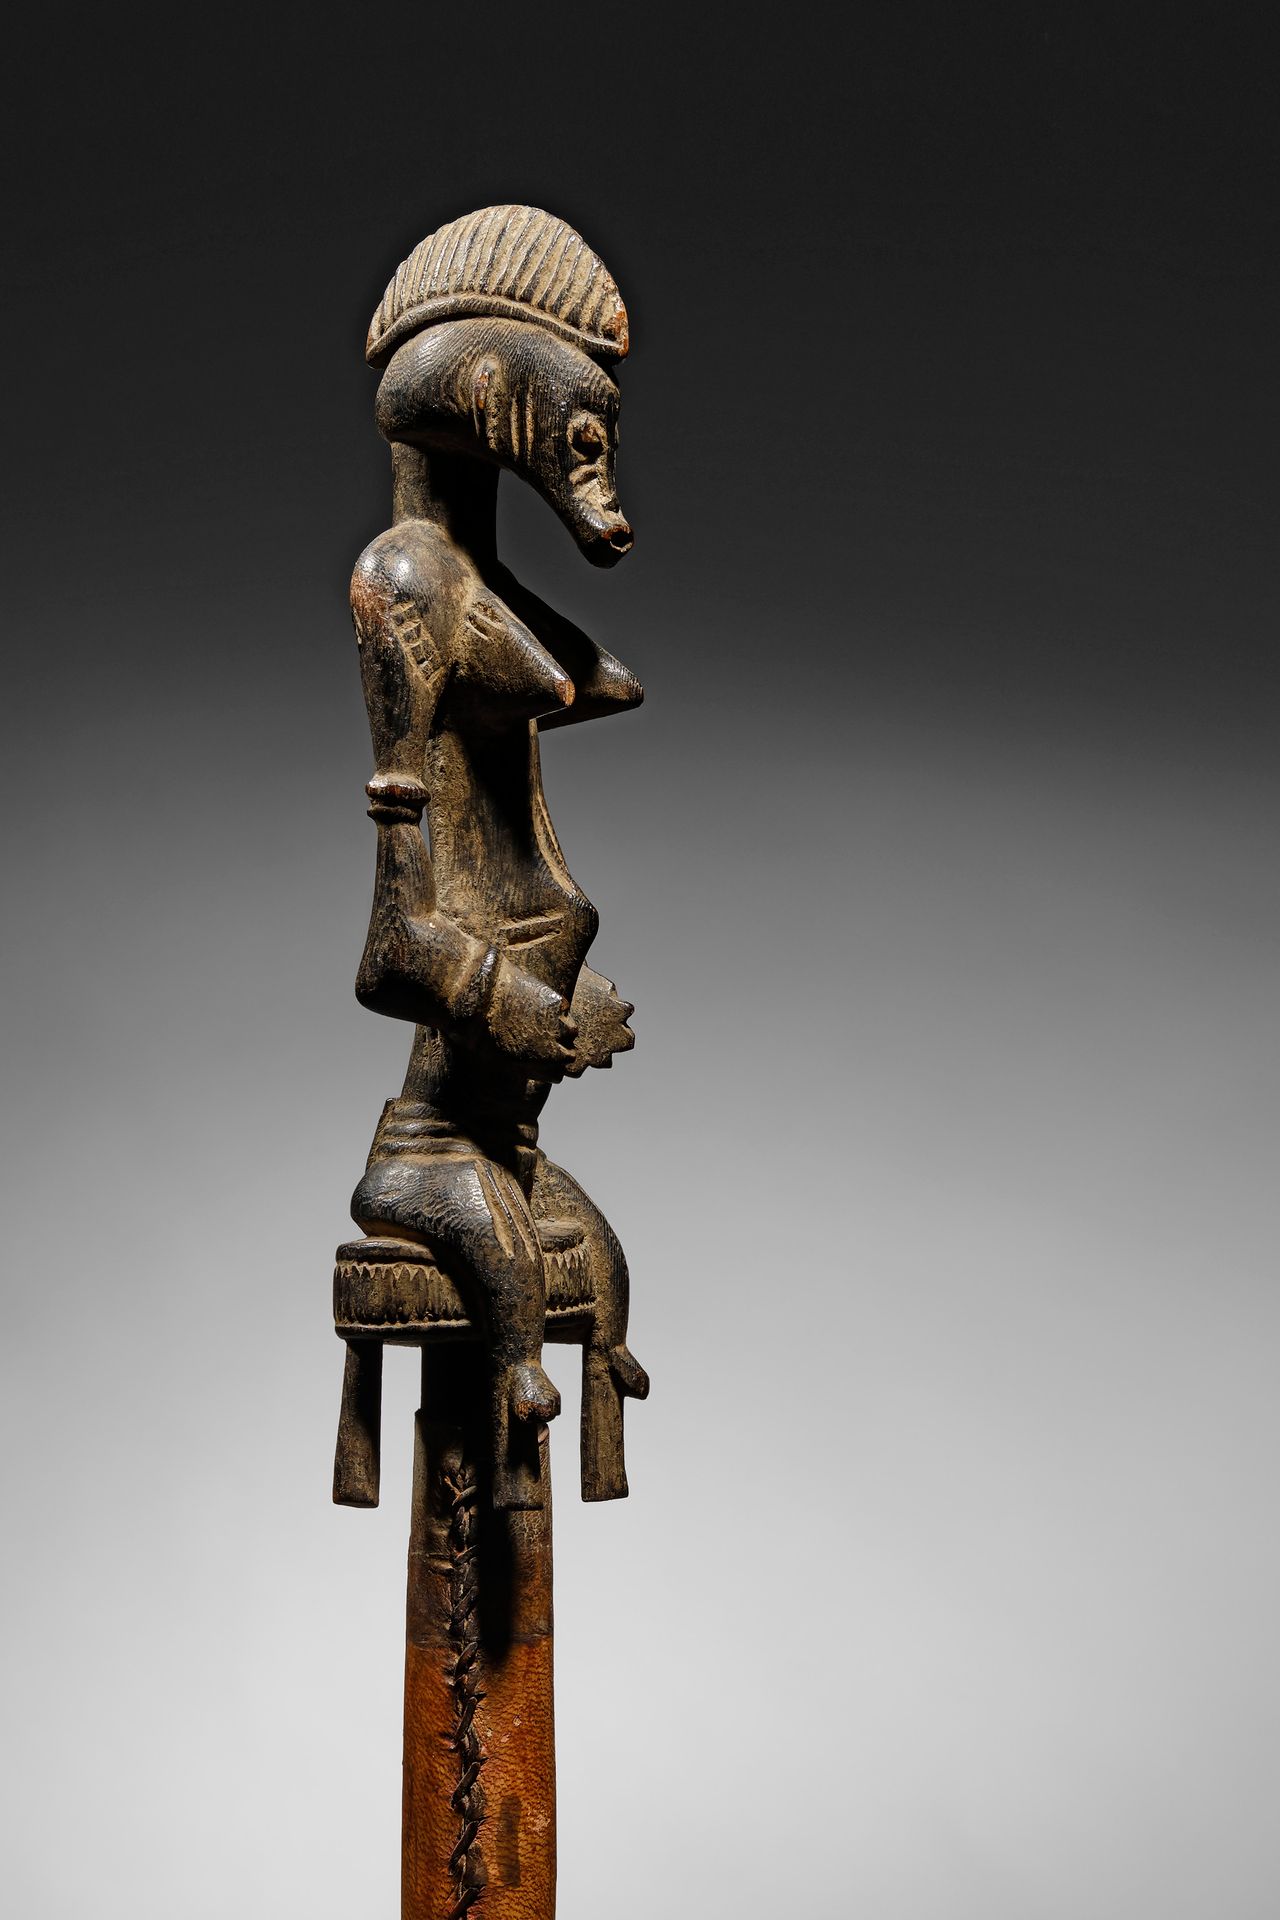 Senufo Staff Ivory Coast

Holz und Leder - 143 cm; Figur: 22,5 cm

Herkunft:

Eb&hellip;